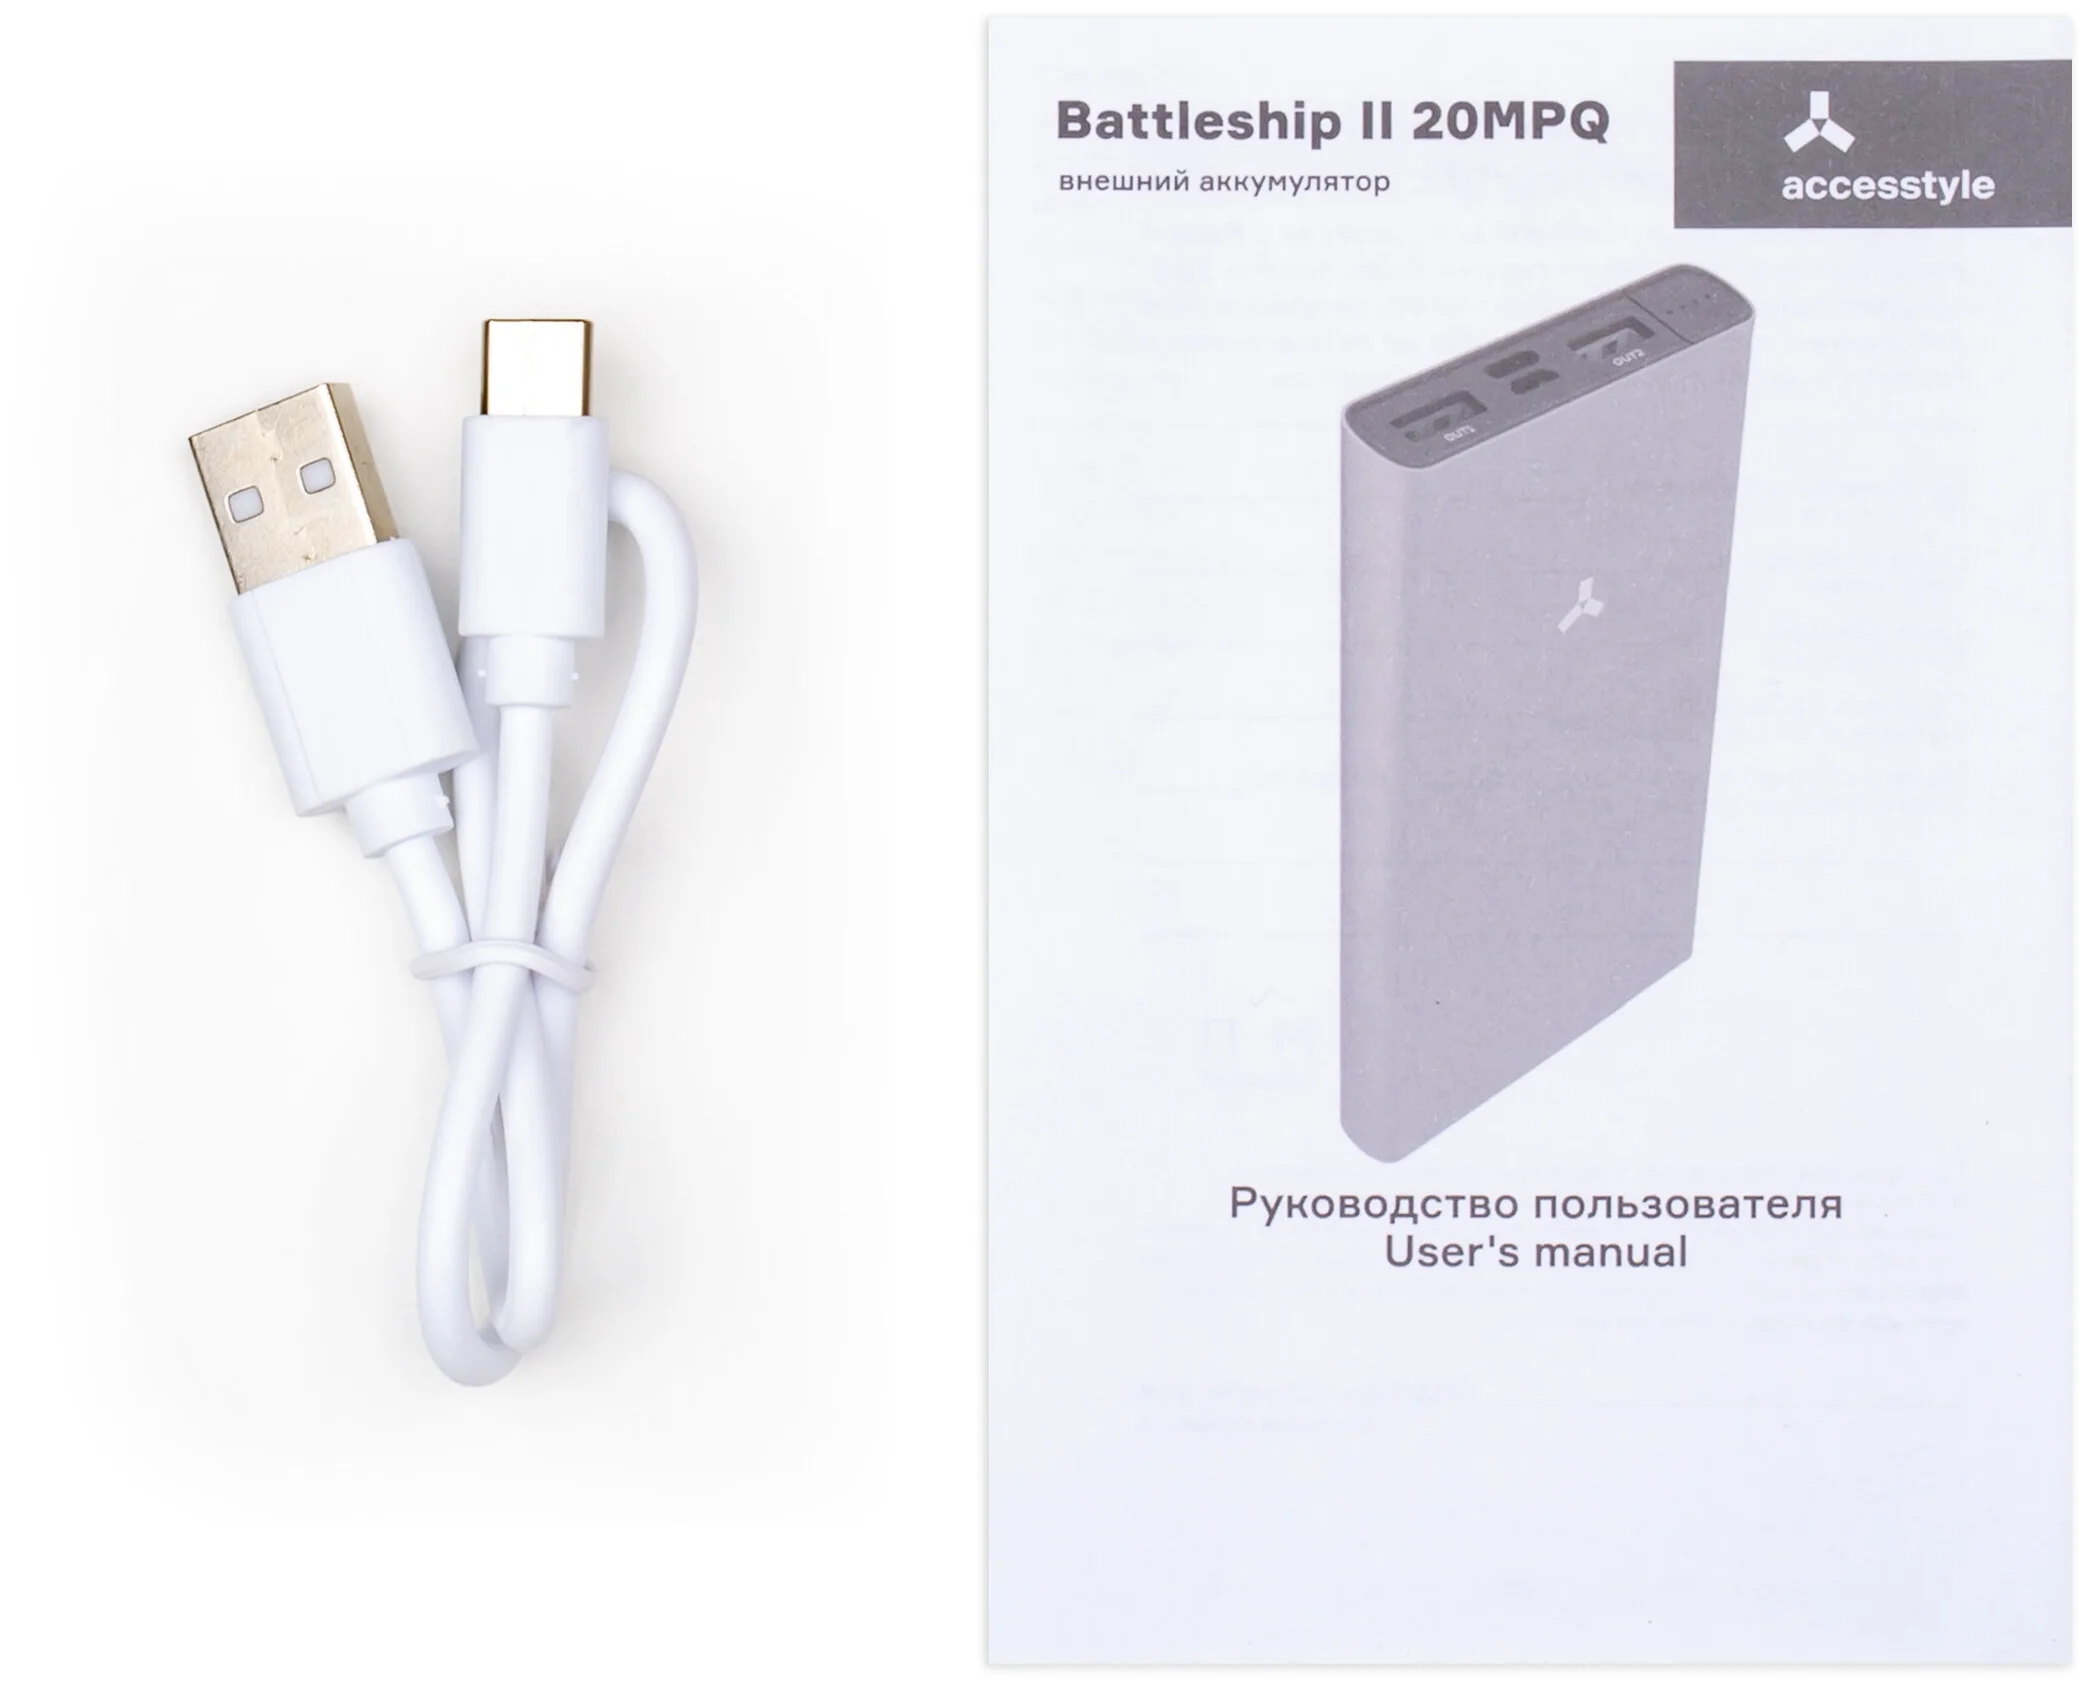 Accesstyle "Battleship" II 20MPQ - вход: micro USB или USB Type-C